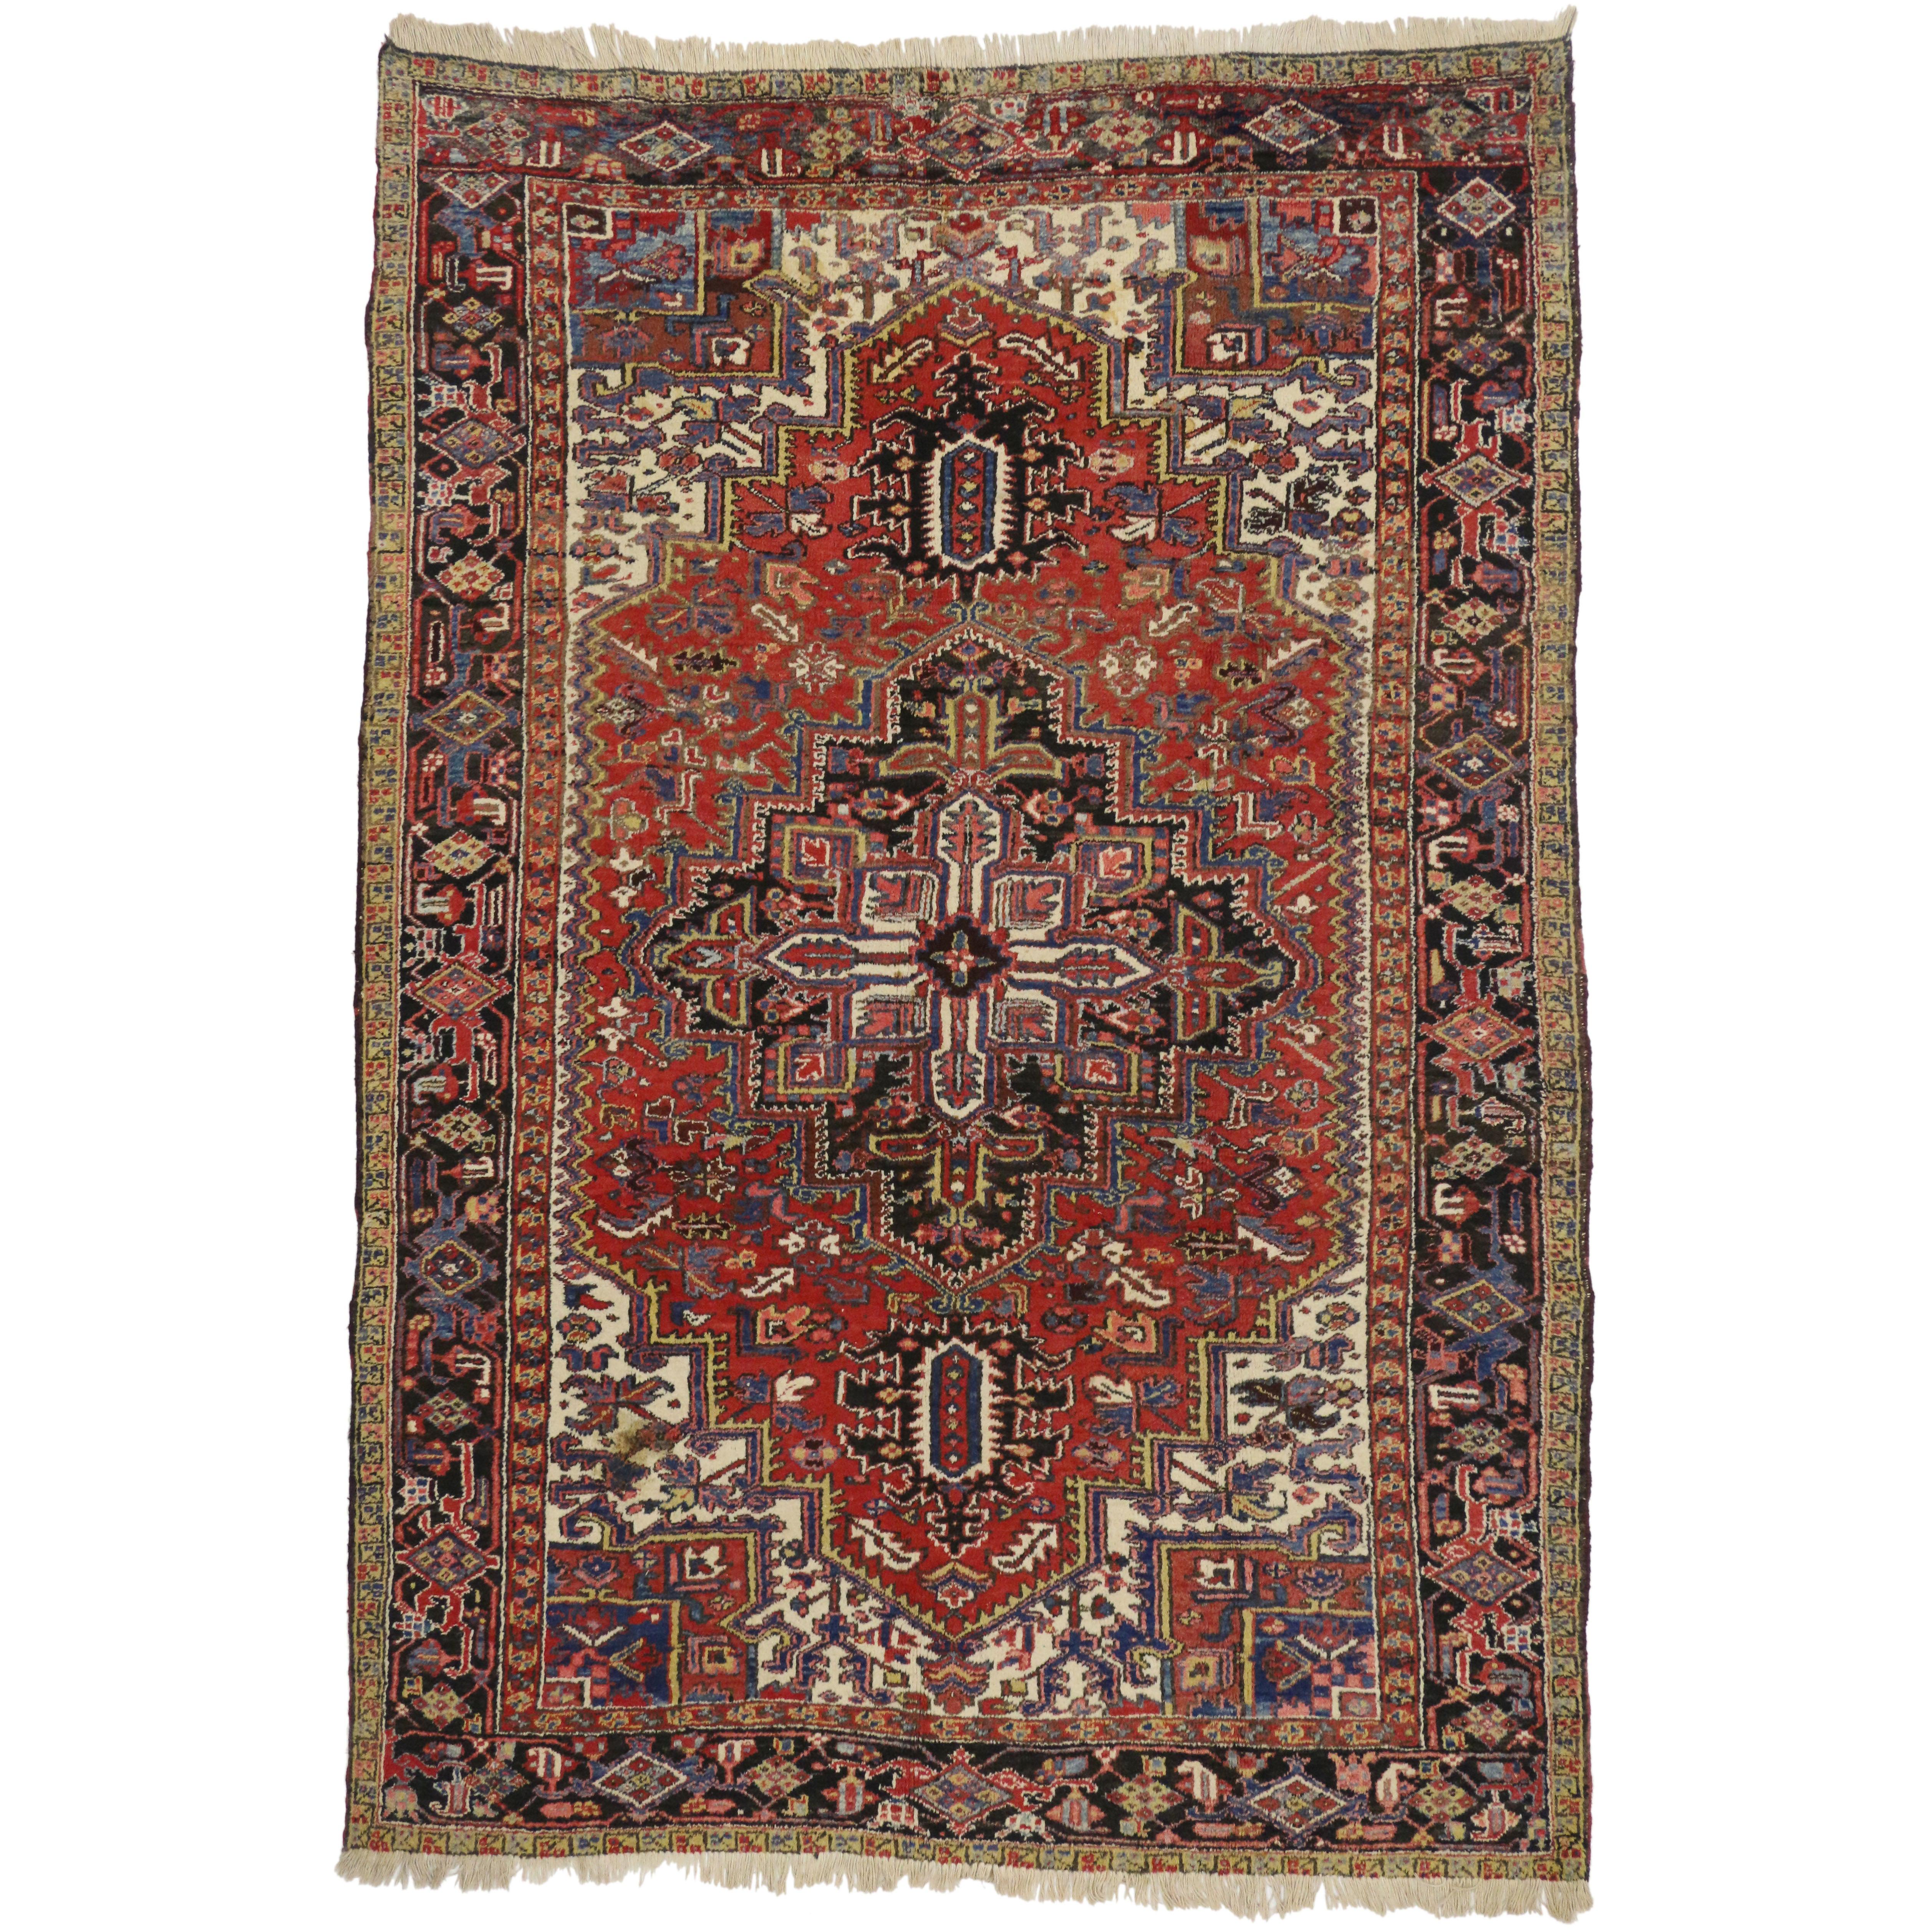 Antique Persian Heriz Rug, Timeless Appeal Meets Modern Elegance